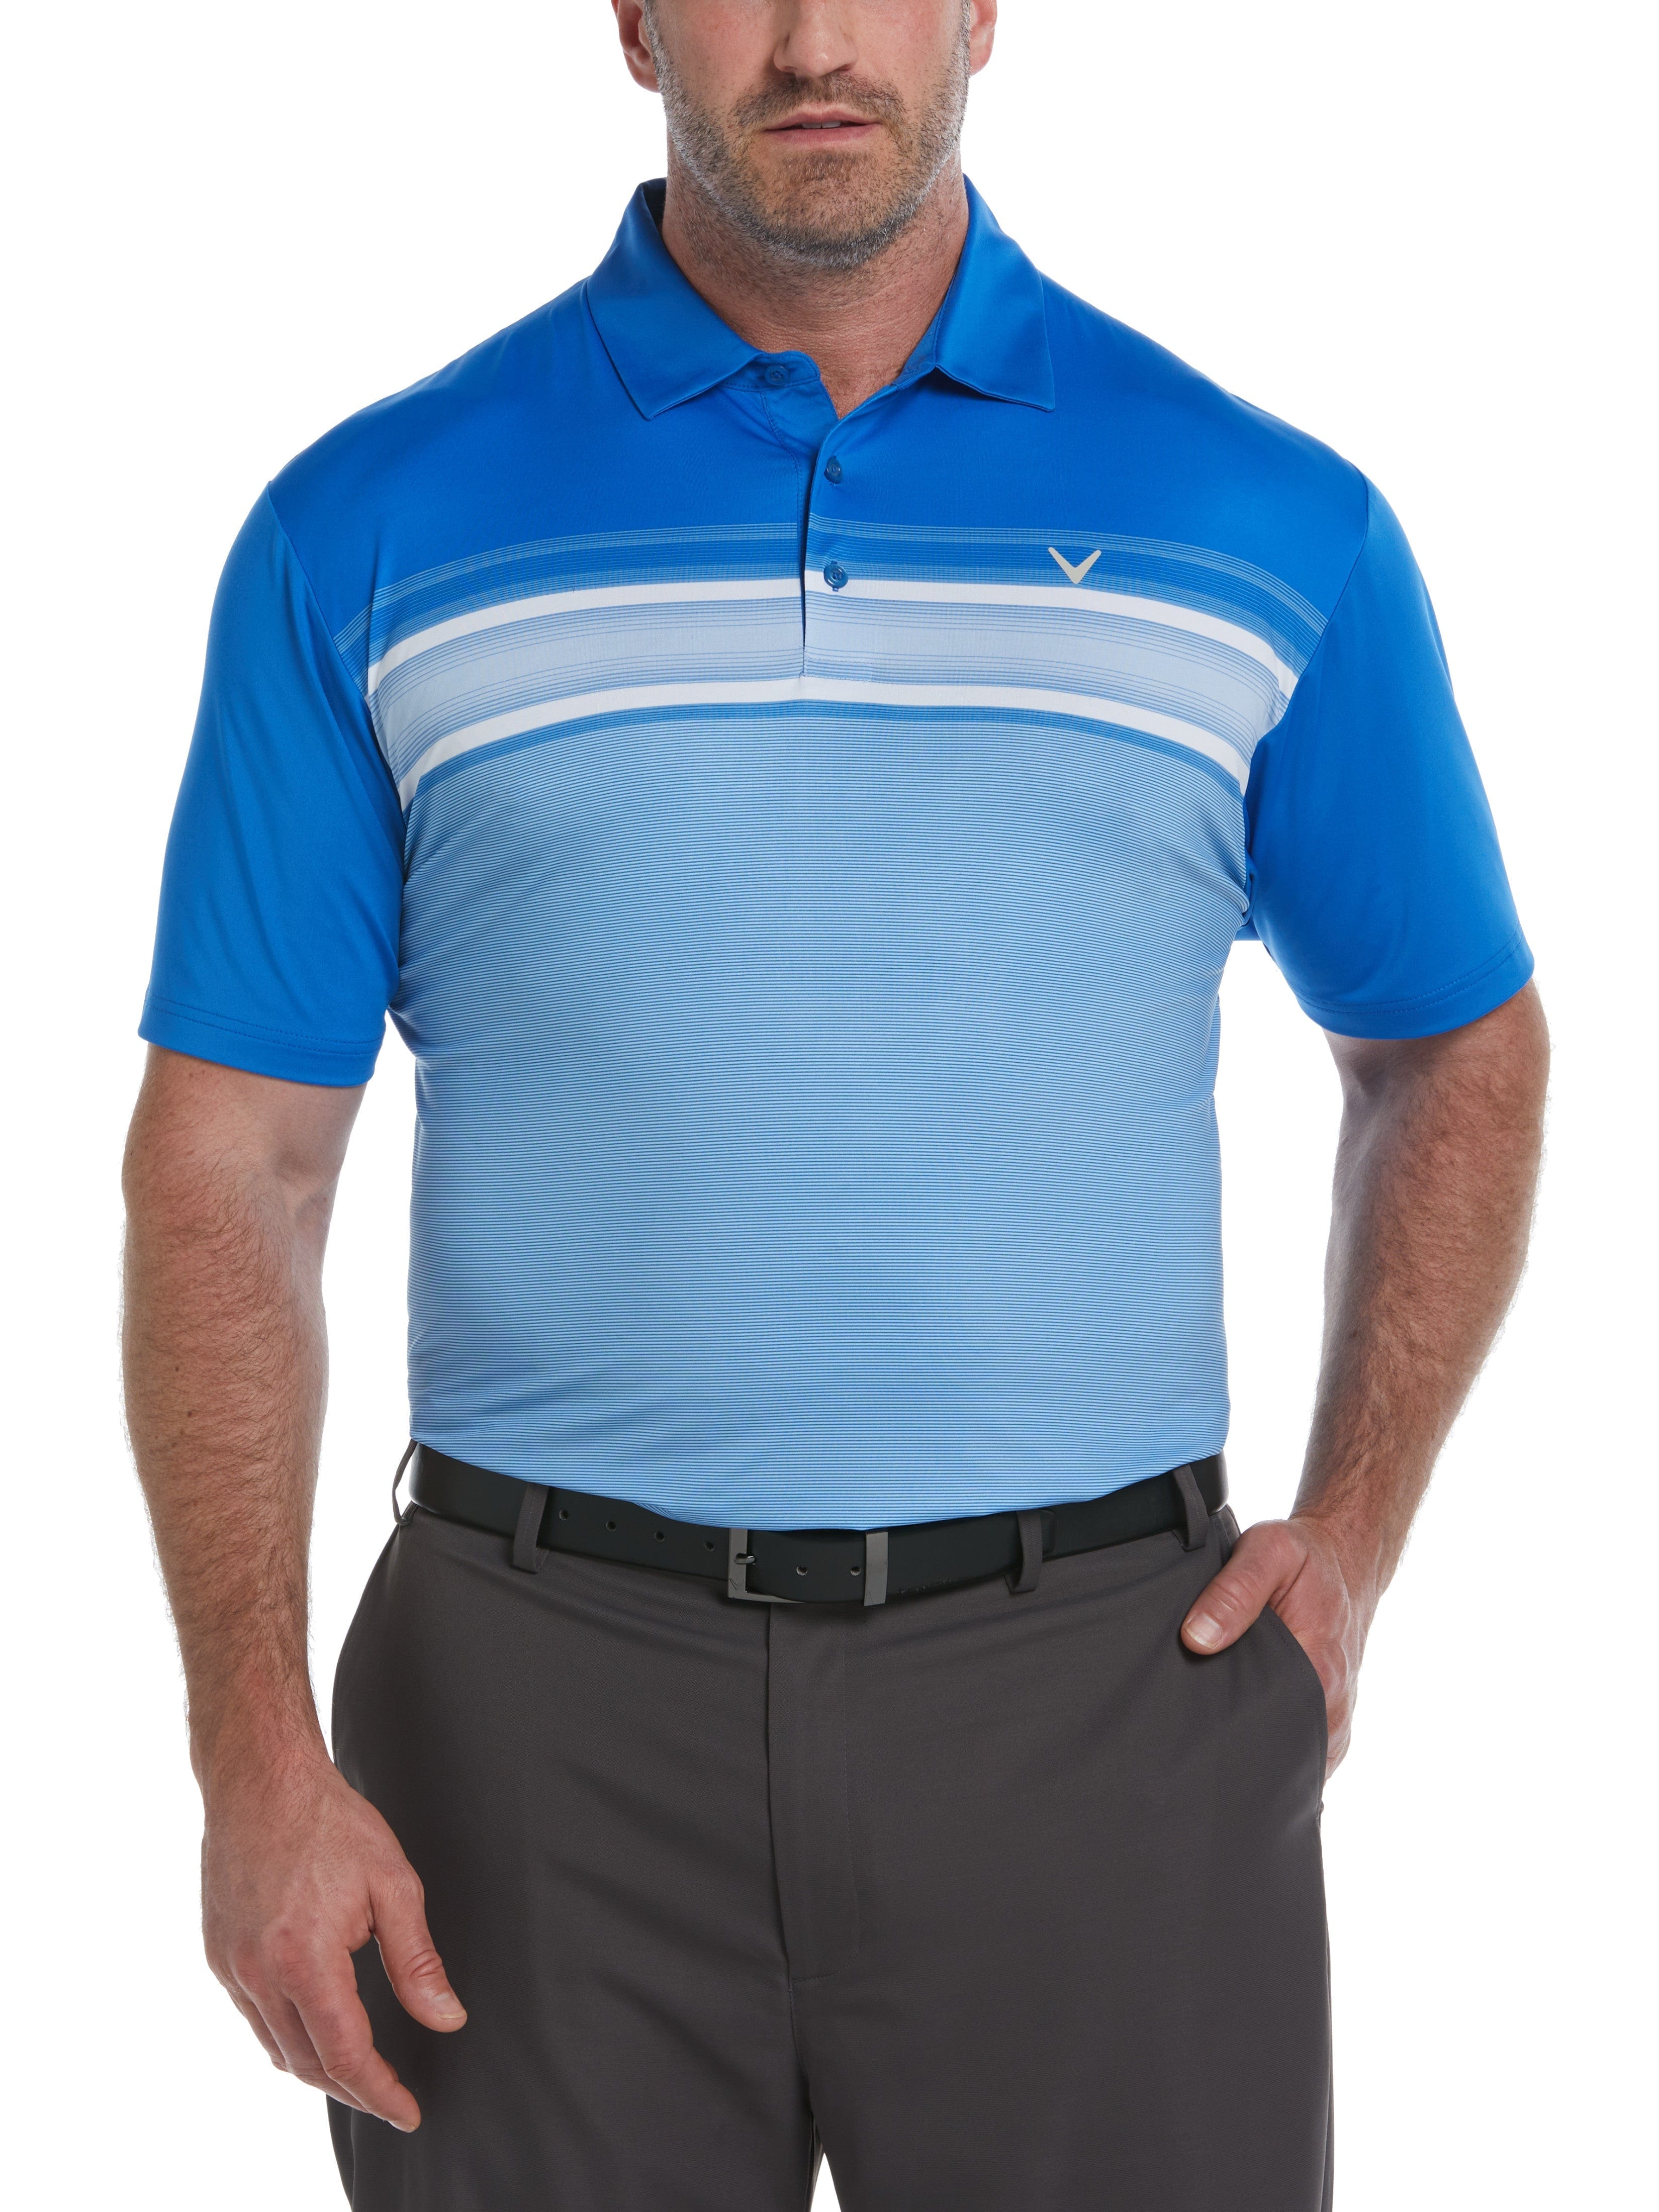 Callaway Apparel Mens Big & Tall Engineered Energy Print Stripe Golf Polo Shirt, Size 1X, Magnetic Blue, Polyester/Spandex | Golf Apparel Shop